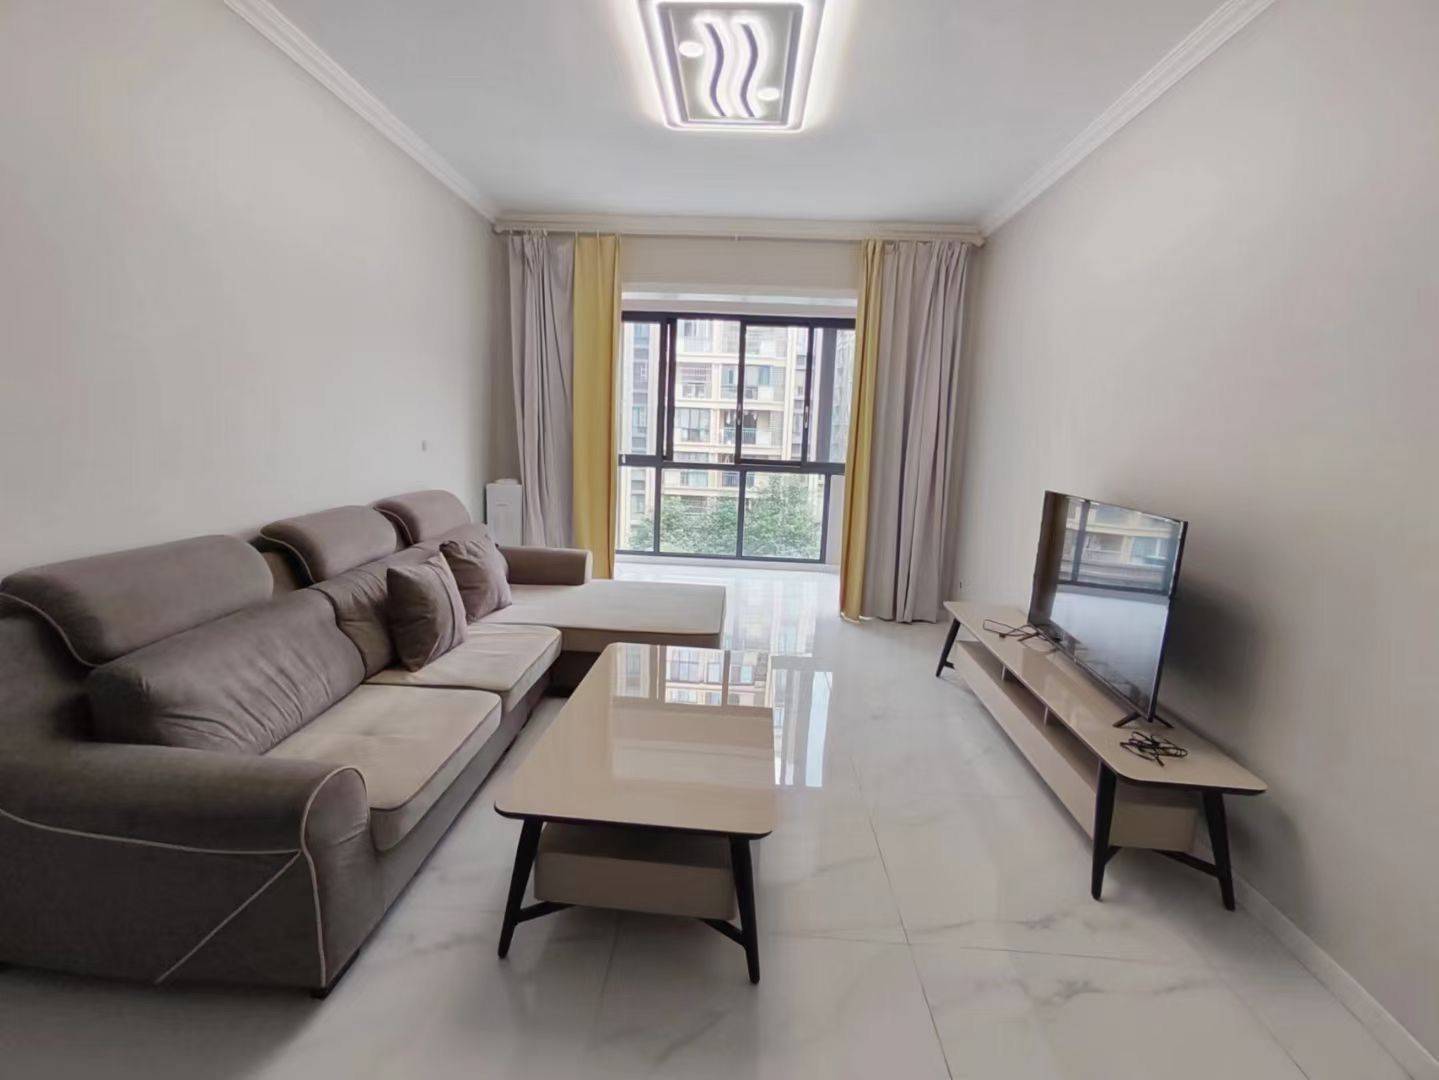 Chengdu-Wuhou-Cozy Home,Clean&Comfy,No Gender Limit,Hustle & Bustle,“Friends”,Chilled